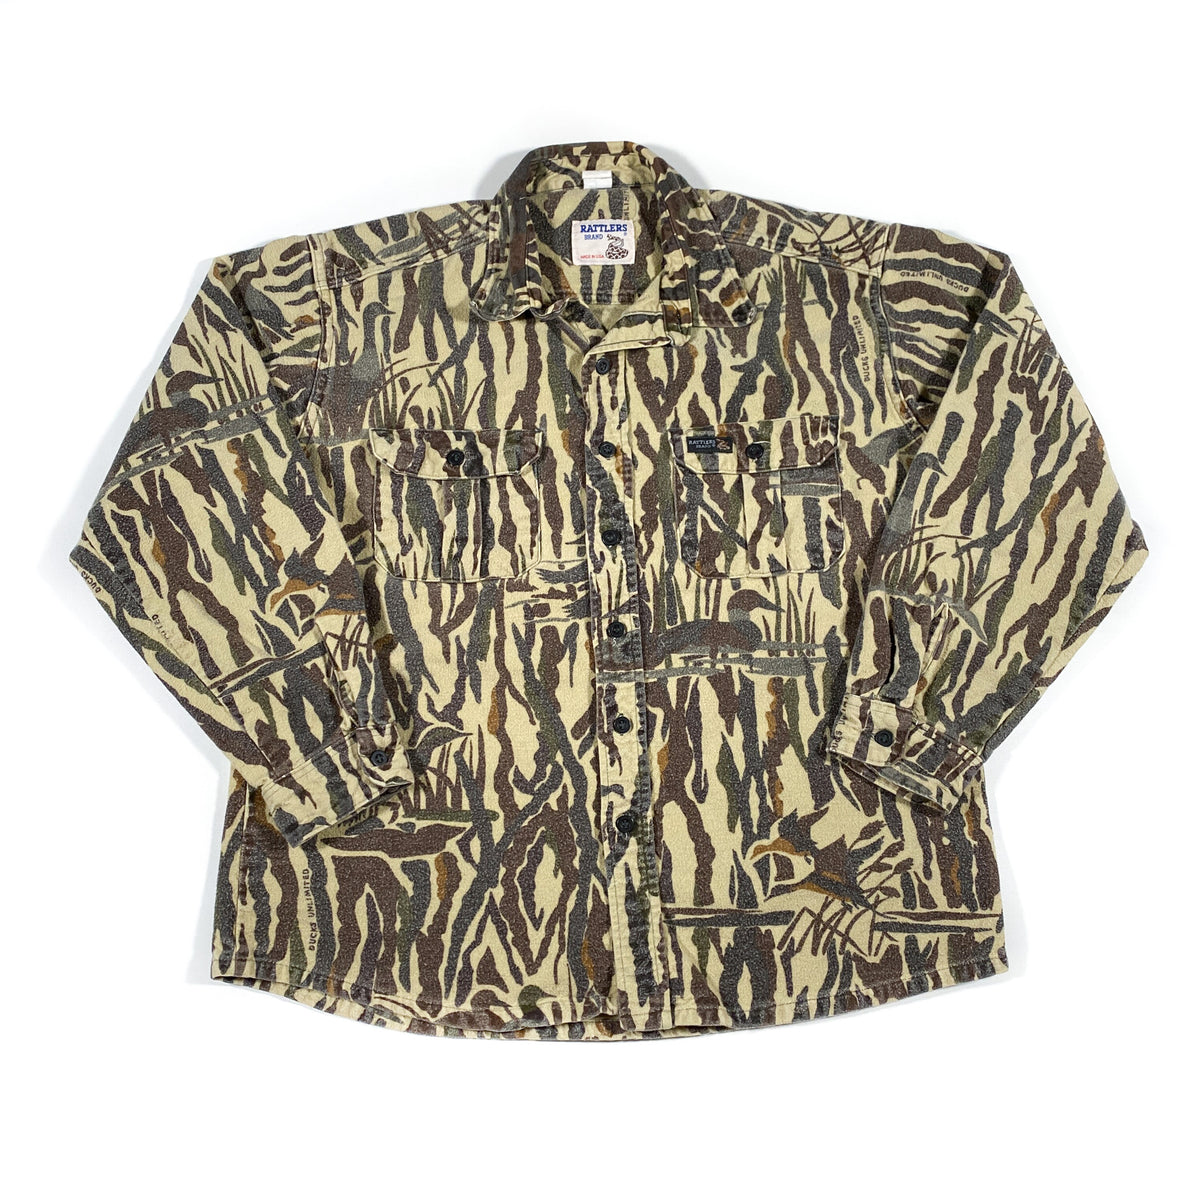 Rattlers Brand Ducks Unlimited Shirt (XL) – Camoretro